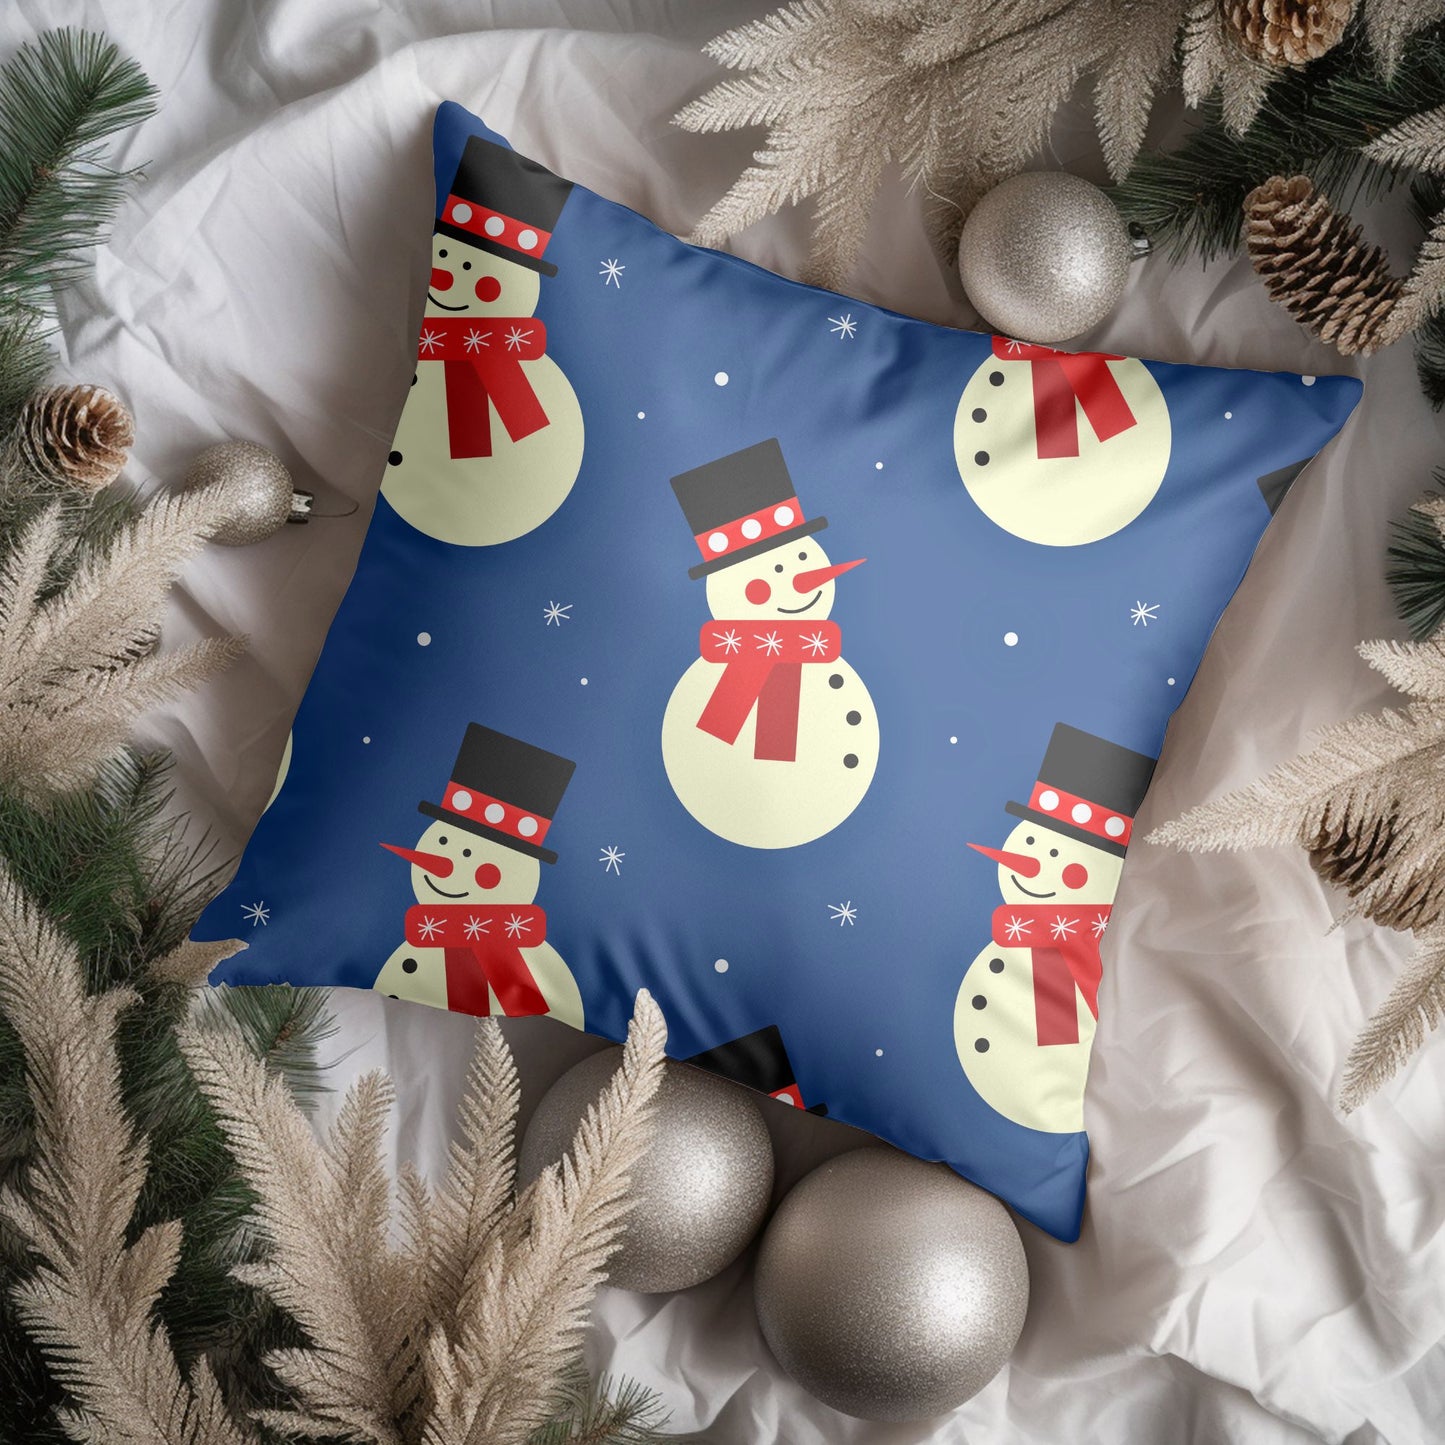 Christmas Theme Pillow for Cozy Festive Decor